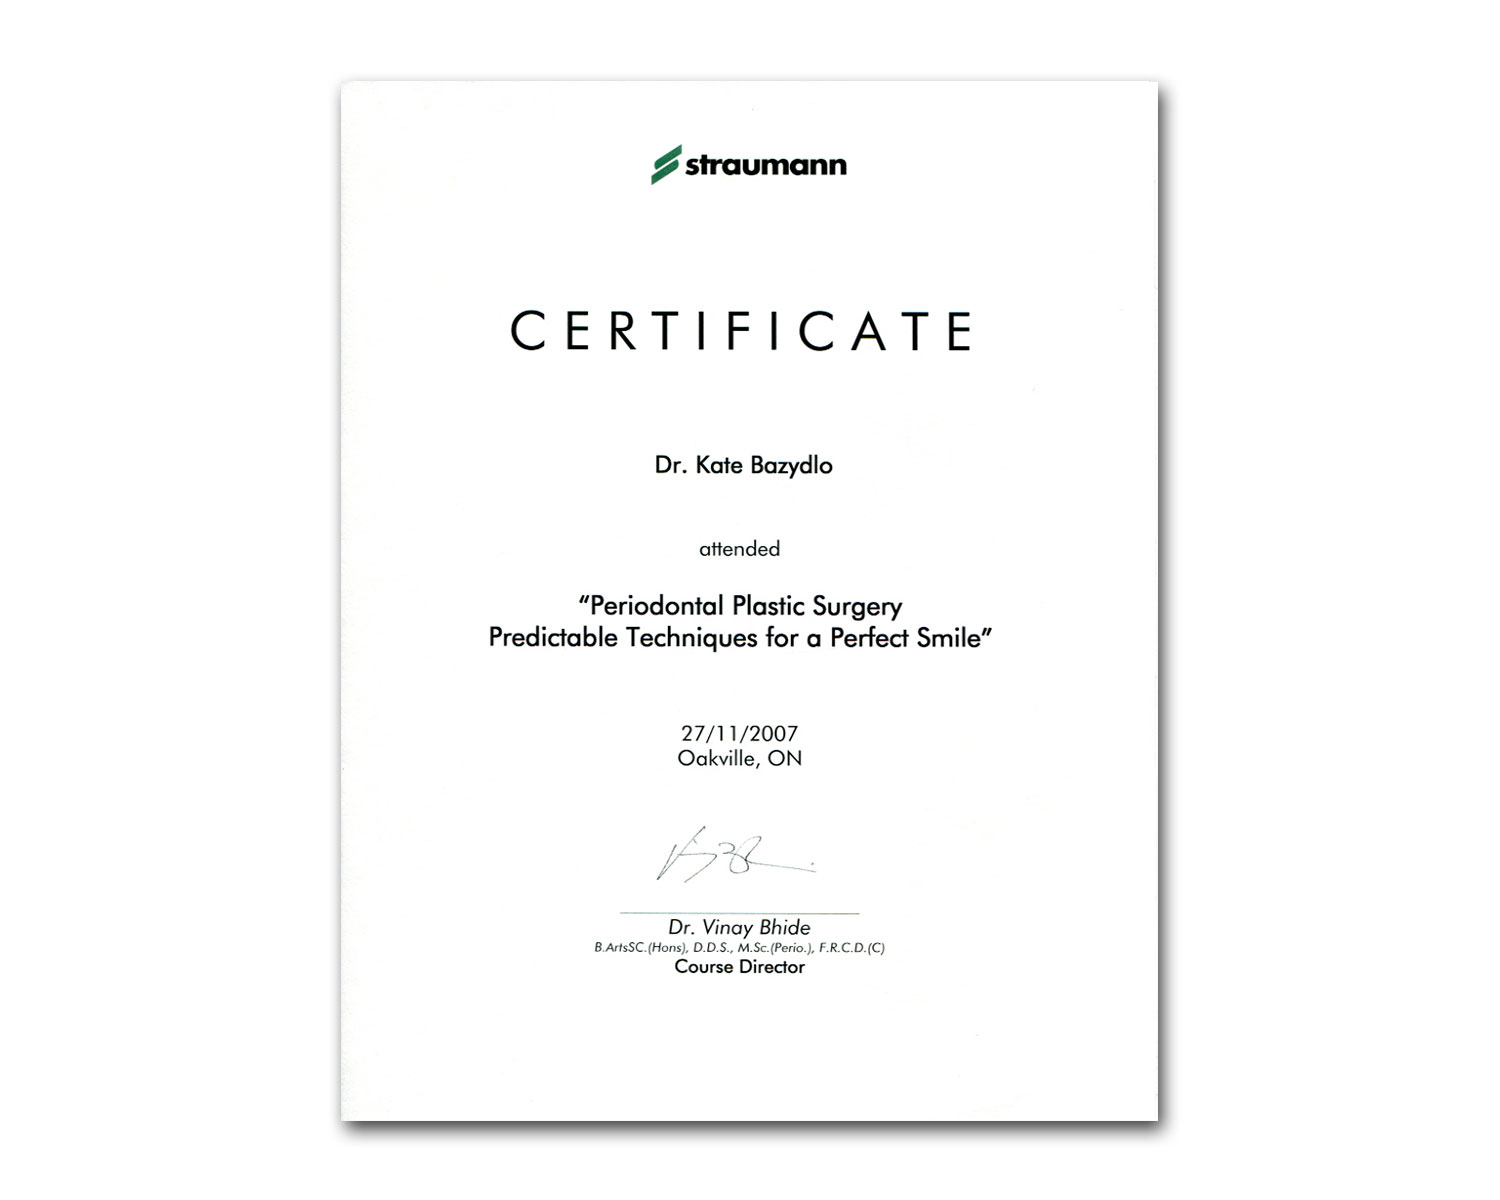 Straumann Group Certificate